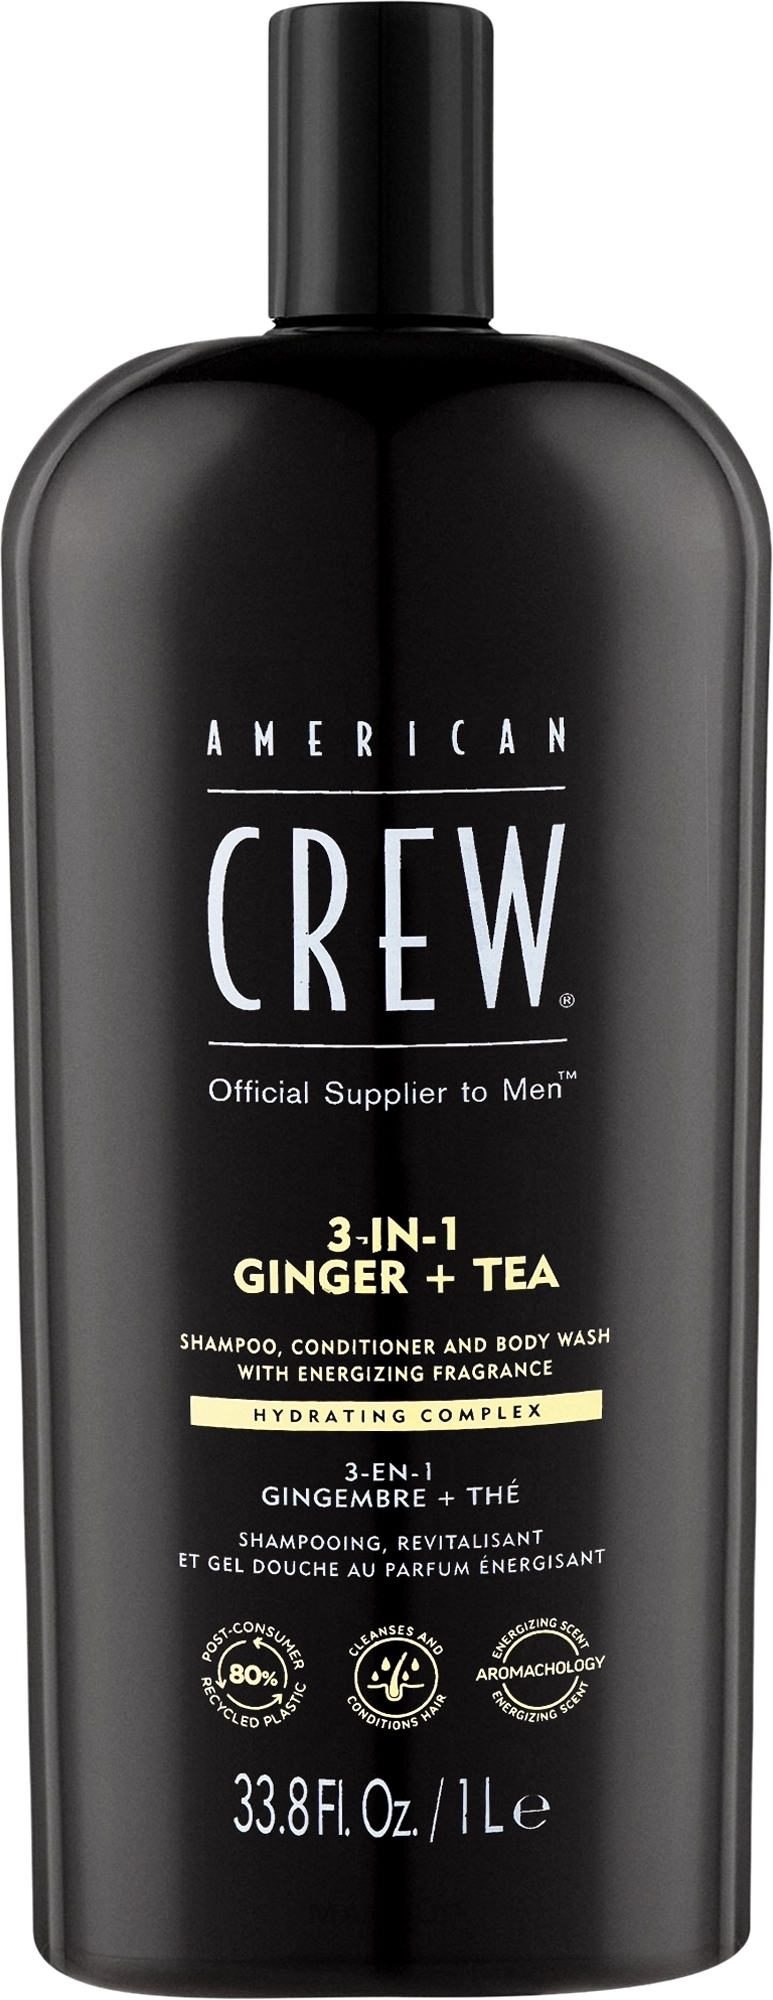 Средство 3 в 1 по уходу за волосами и телом - American Crew Official Supplier To Men 3 In 1 Ginger + Tea Shampoo Conditioner And Body Wash  — фото 1000ml